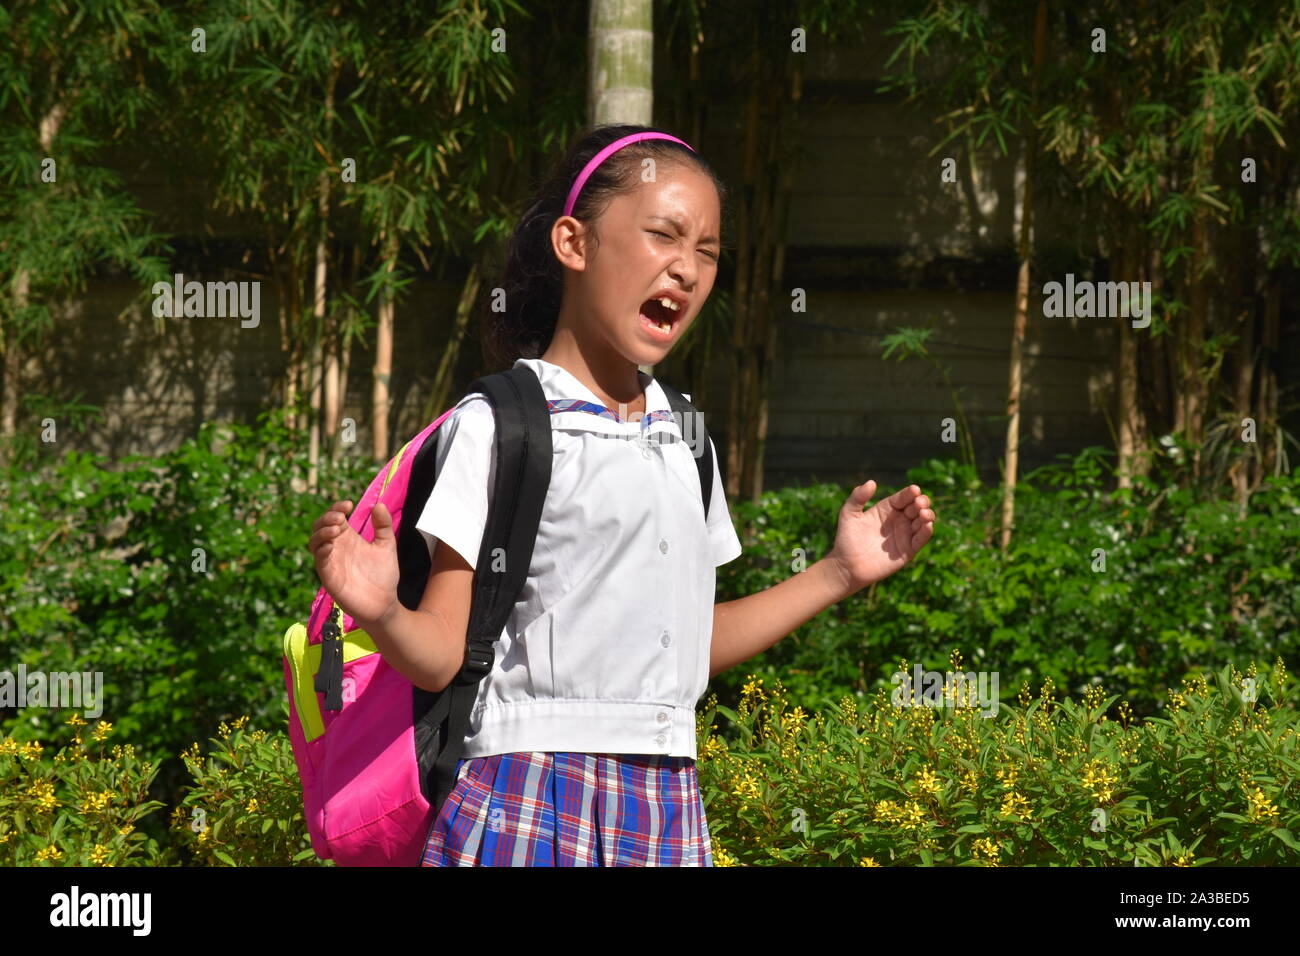 A Girl Student Yelling Wearing Uniform Stock Photo